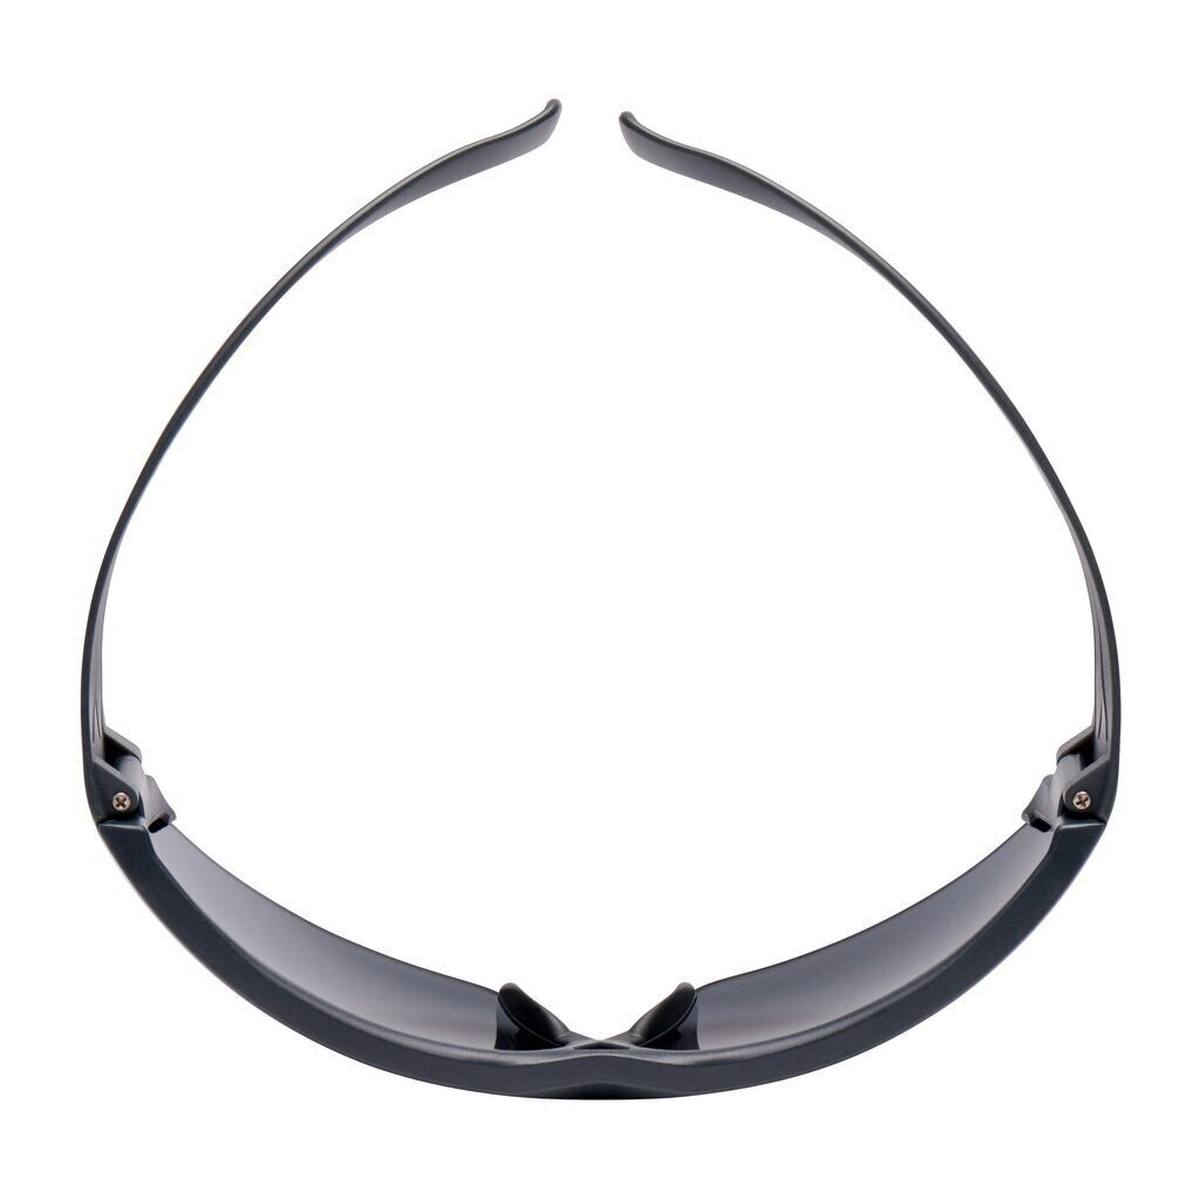 3M SecureFit 600 Schutzbrille, graue Bügel, Scotchgard Anti-Fog-/Antikratz-Beschichtung (K&N), graue Scheibe, SF602SGAF-EU